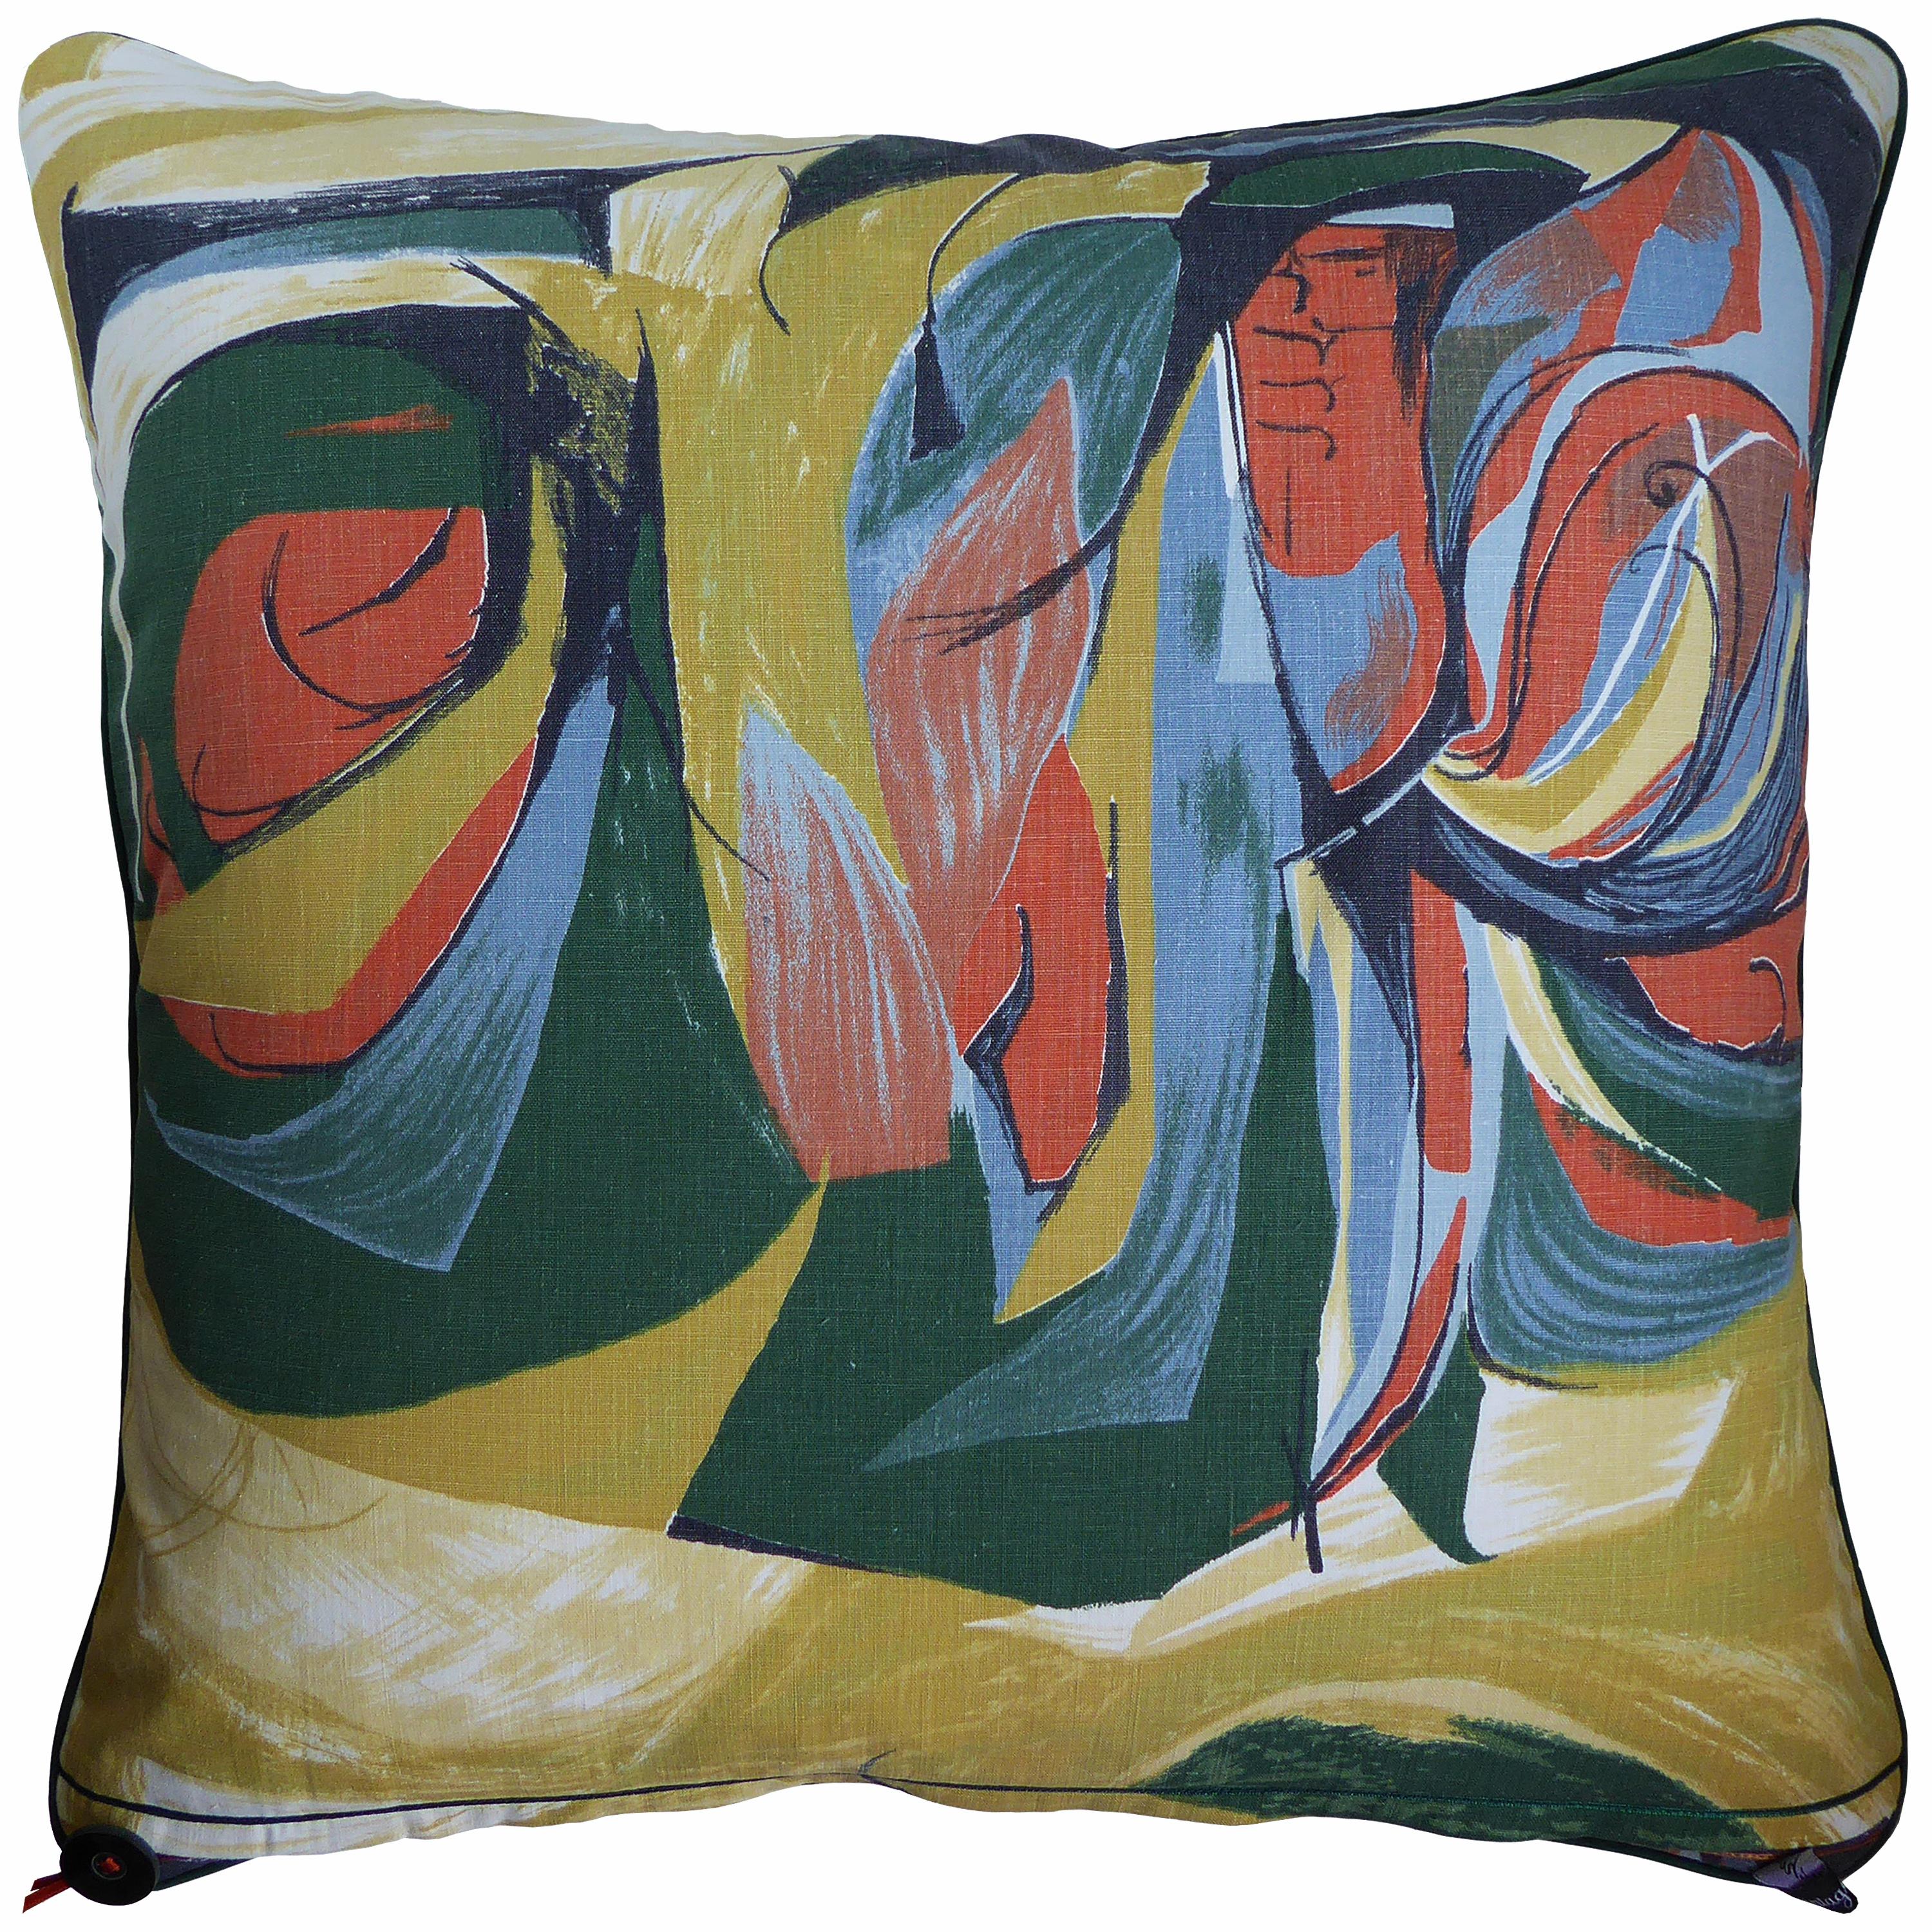 British Vintage Cushions, Bespoke made Mid-century Pillow ‘Sweet Corn', Made in London